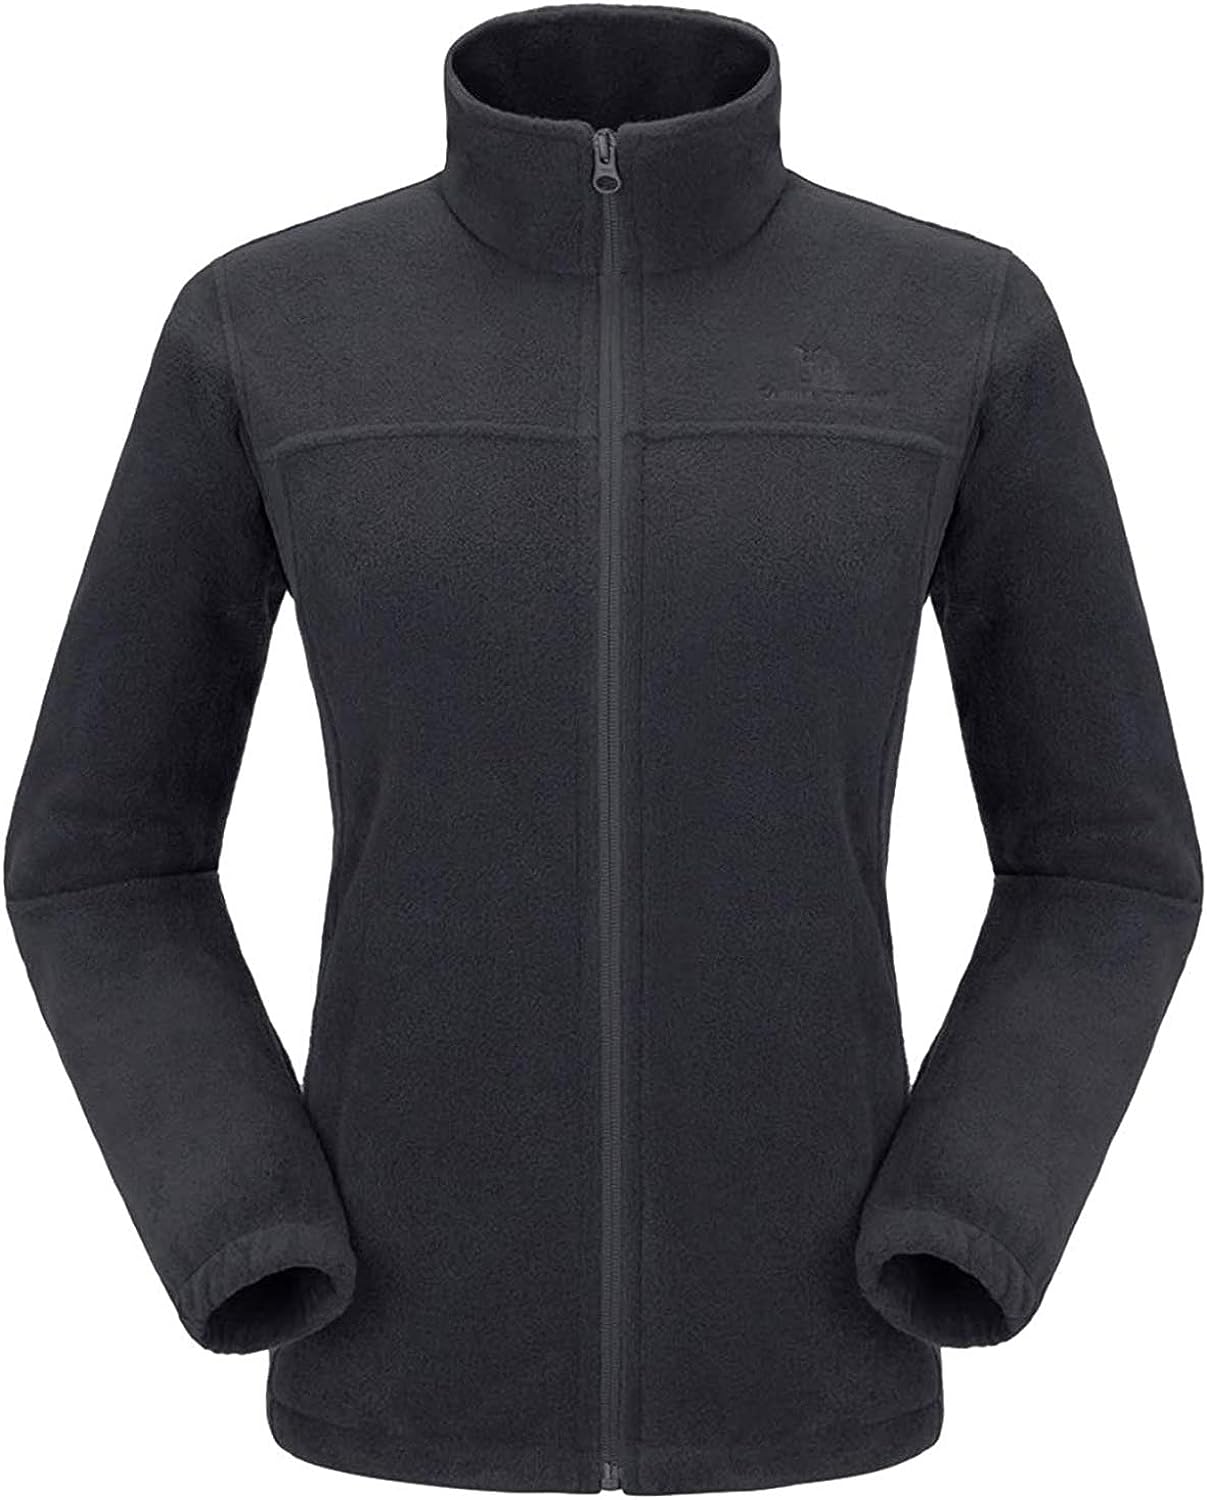 Wholesale Women's Full Zip Thermal Jackets With Pockets Soft Polar Fleece Coat - Gray